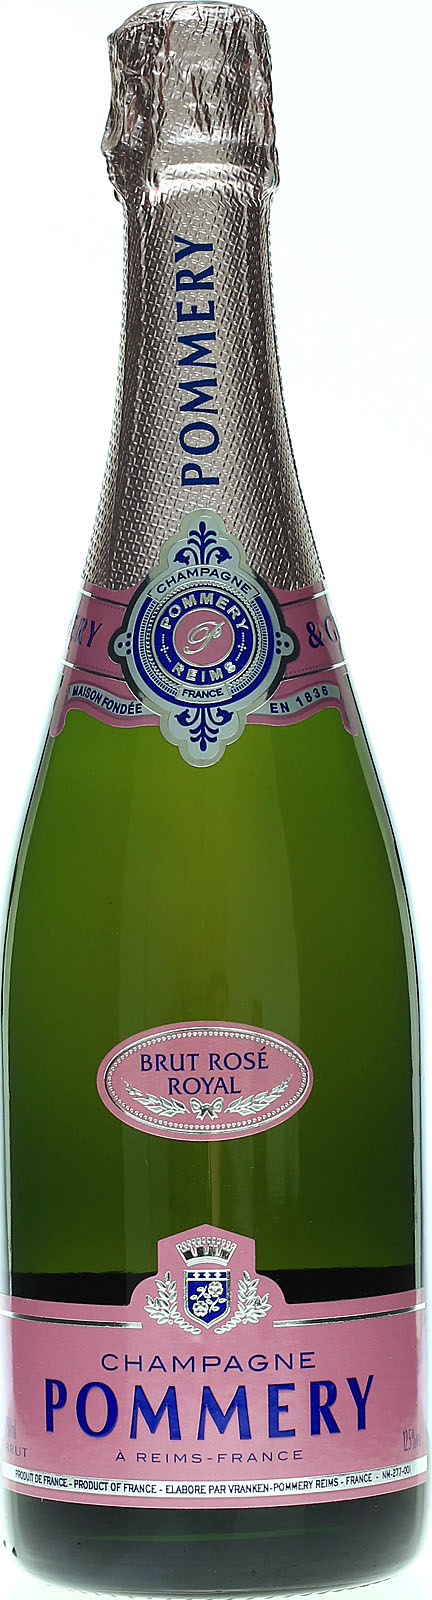 Shop uns bei Pommery Brut Rose hier im Champagner